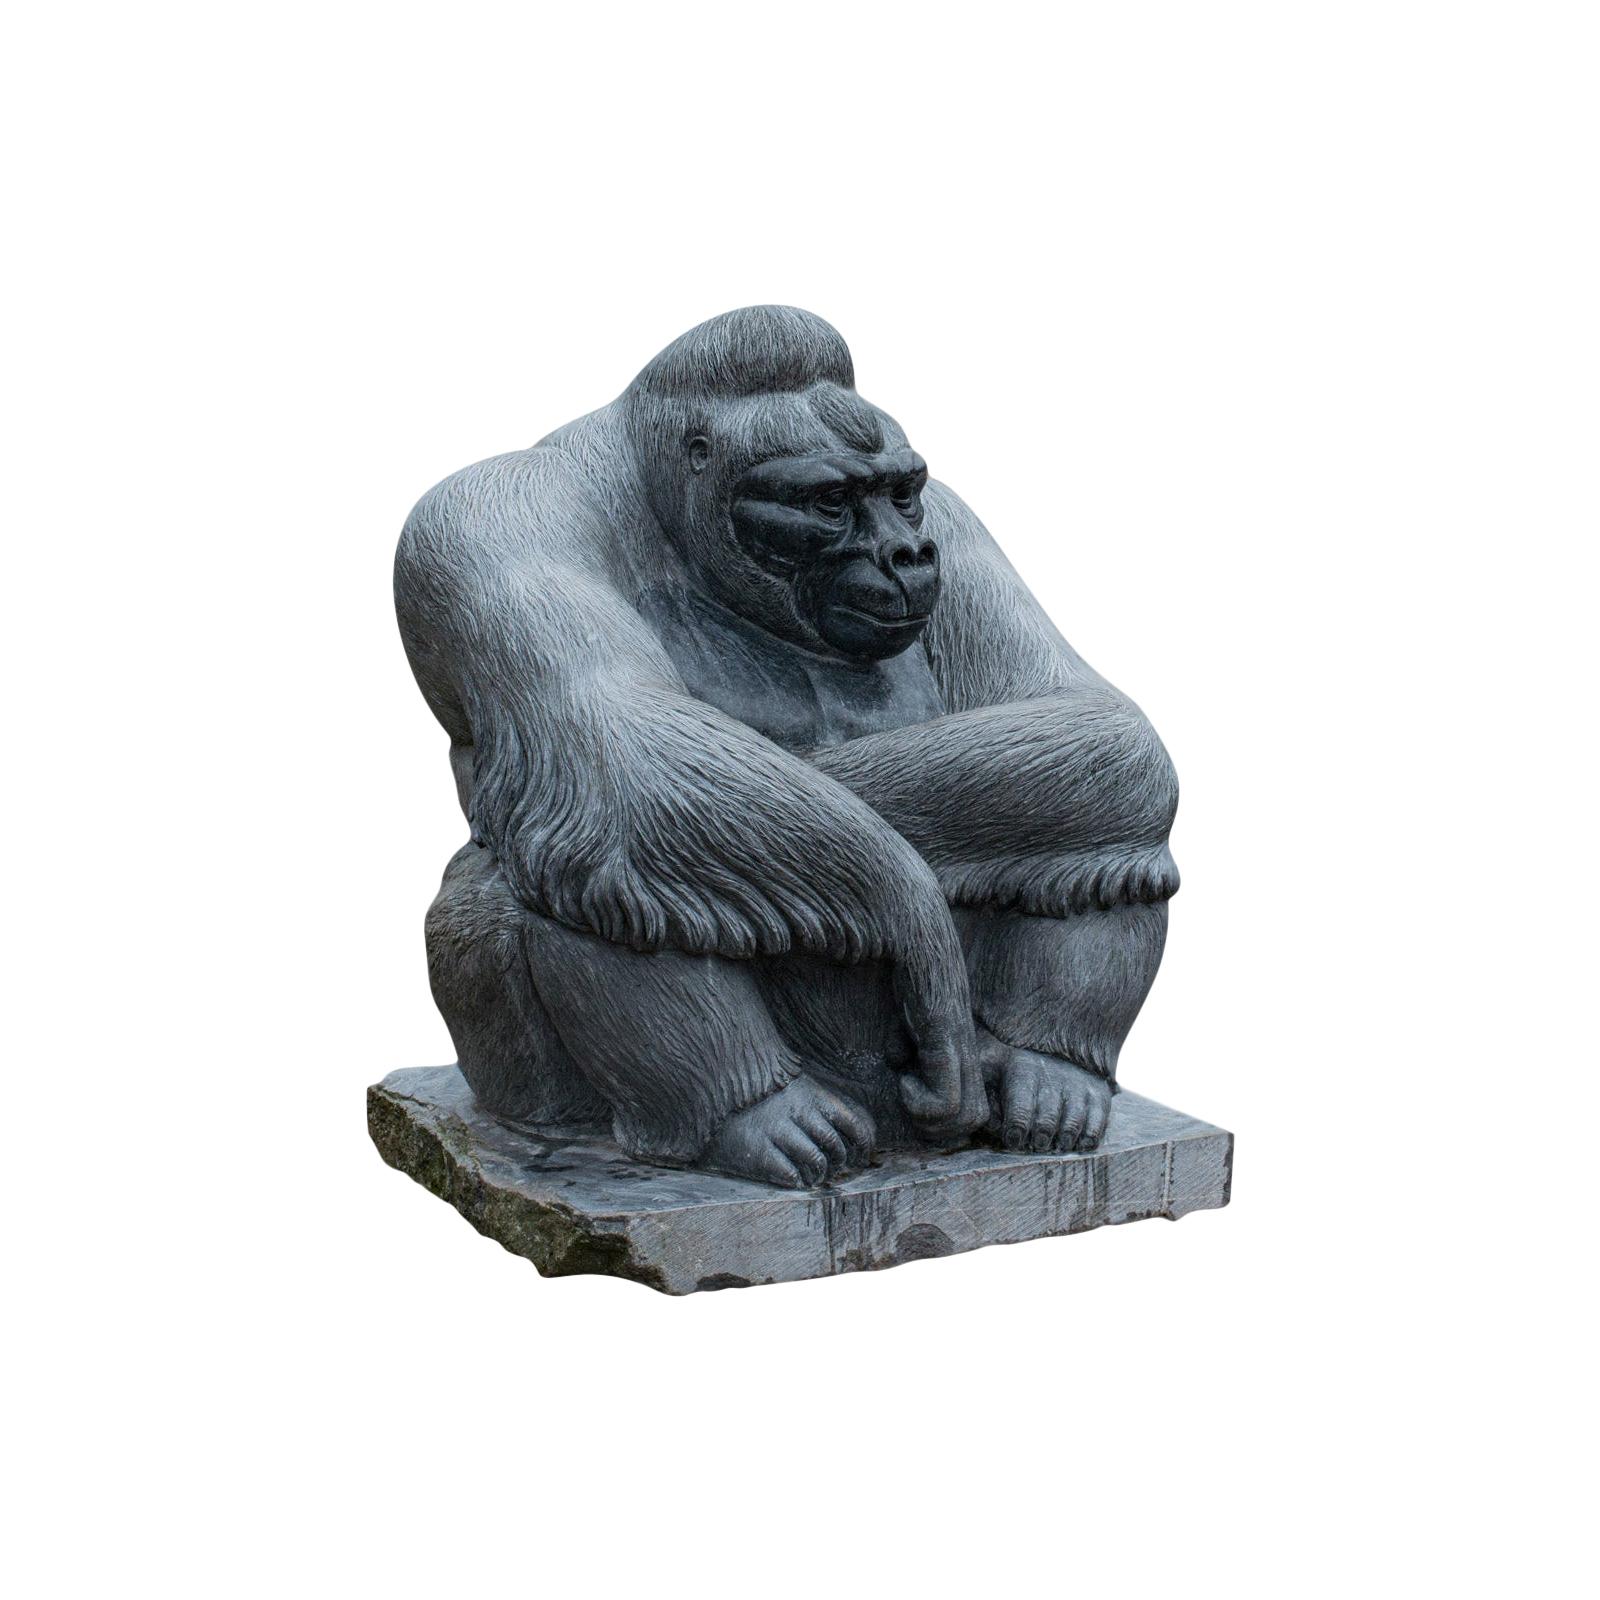 Grande statue sculpturale en marbre Shabani Lowland Gorilla de Dominic Hurley